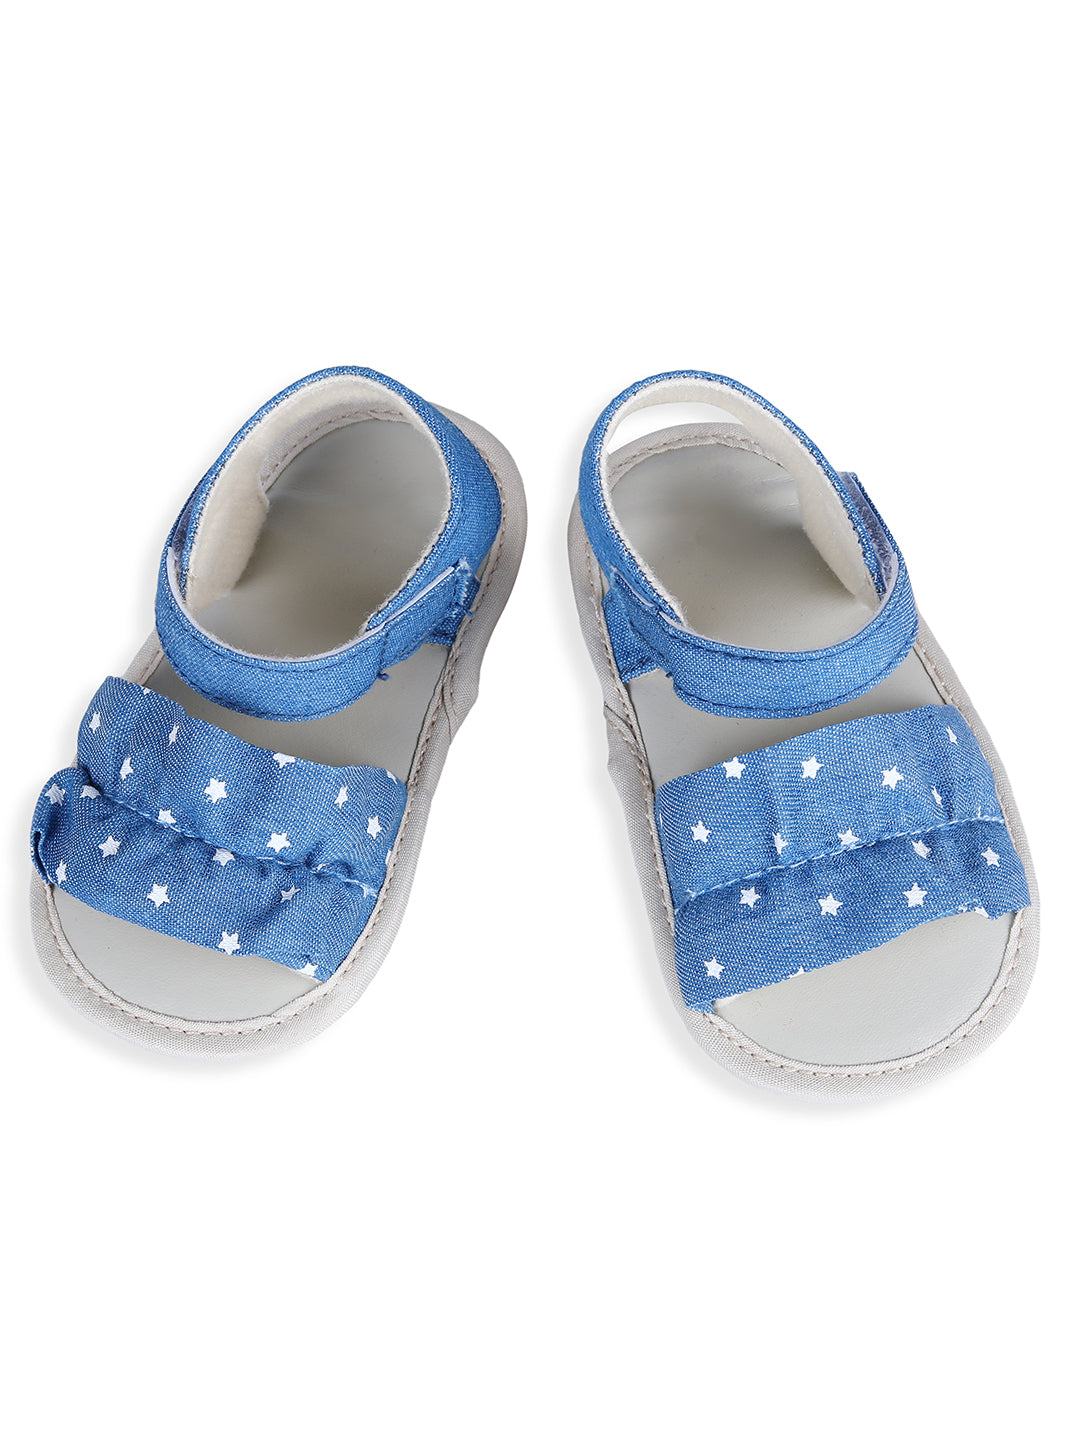 Baby Moo Ruffle Star Premium Infant Girls Anti-Slip Sandal Booties - Blue